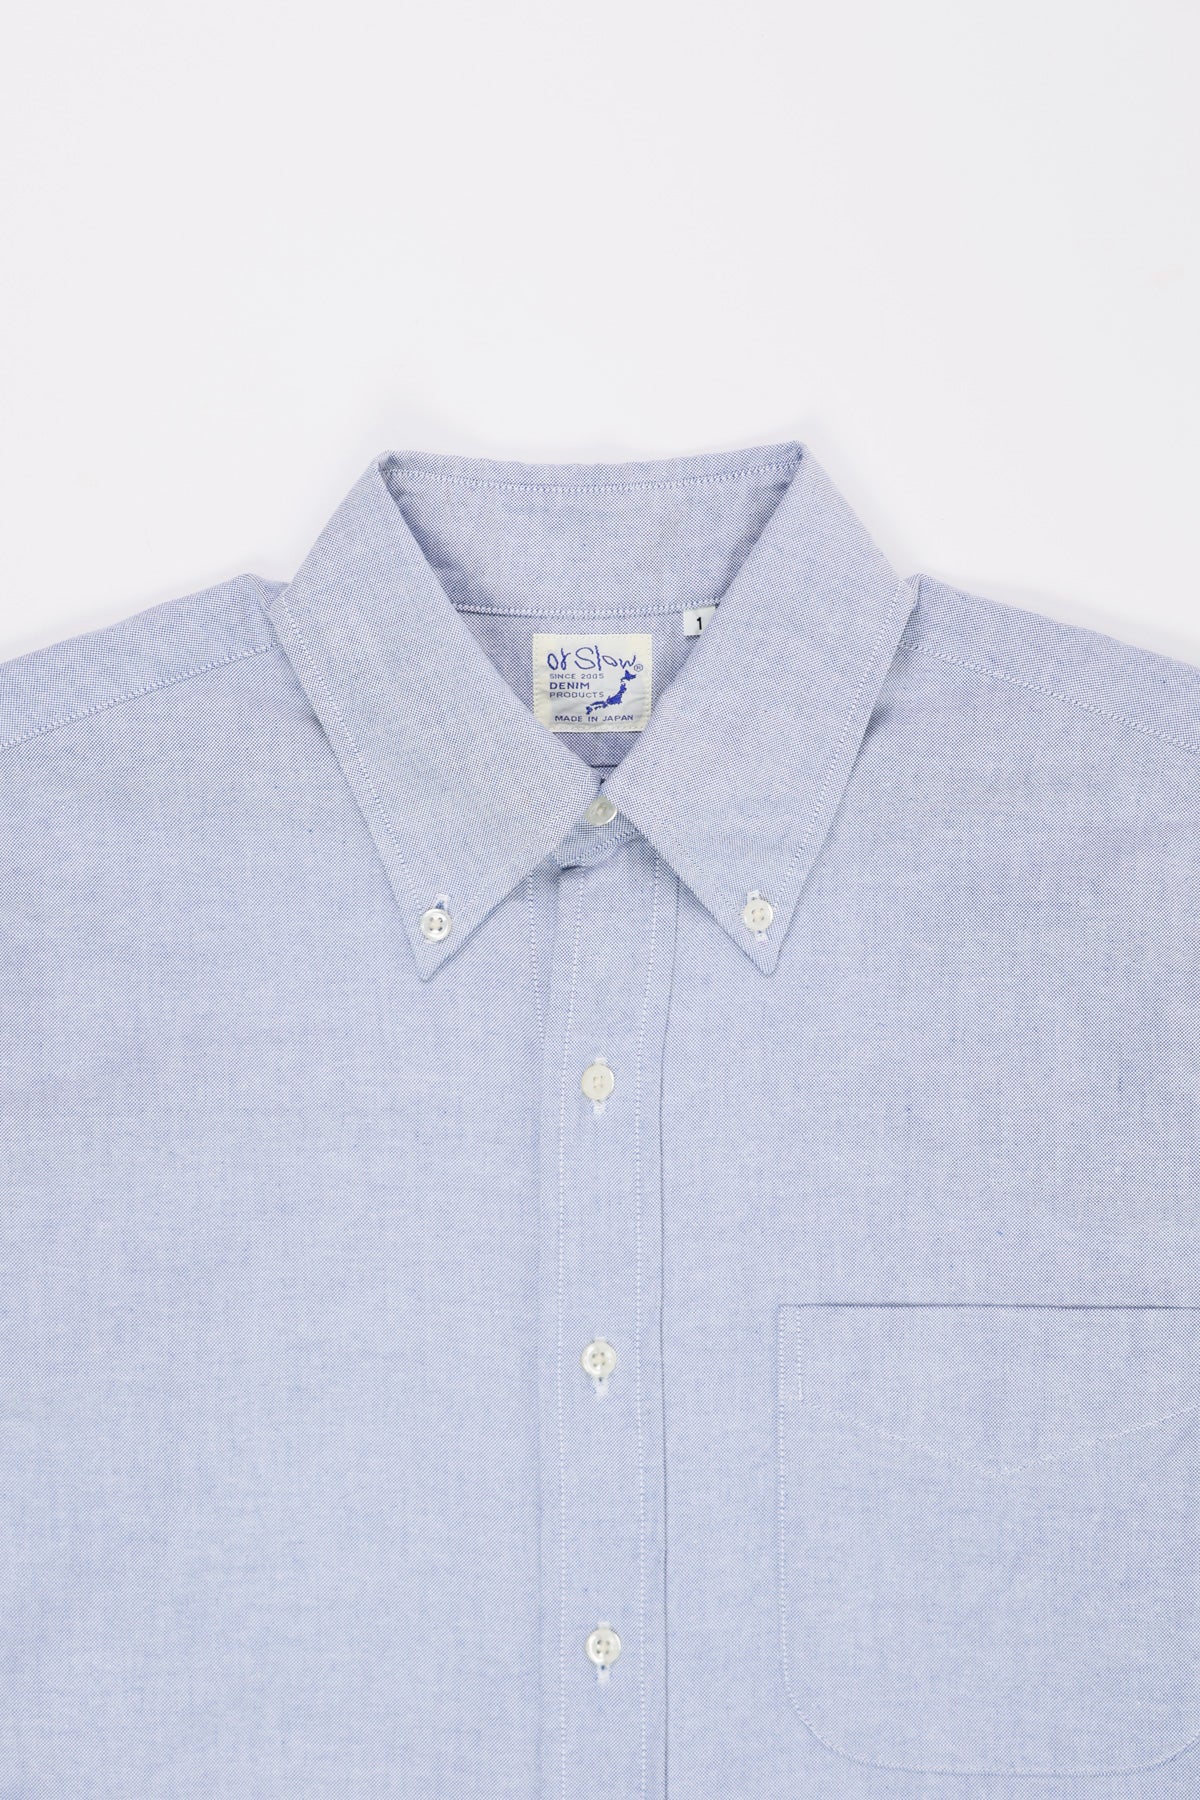 orSlow - Oxford Buttondown Shirt - Blue - Canoe Club